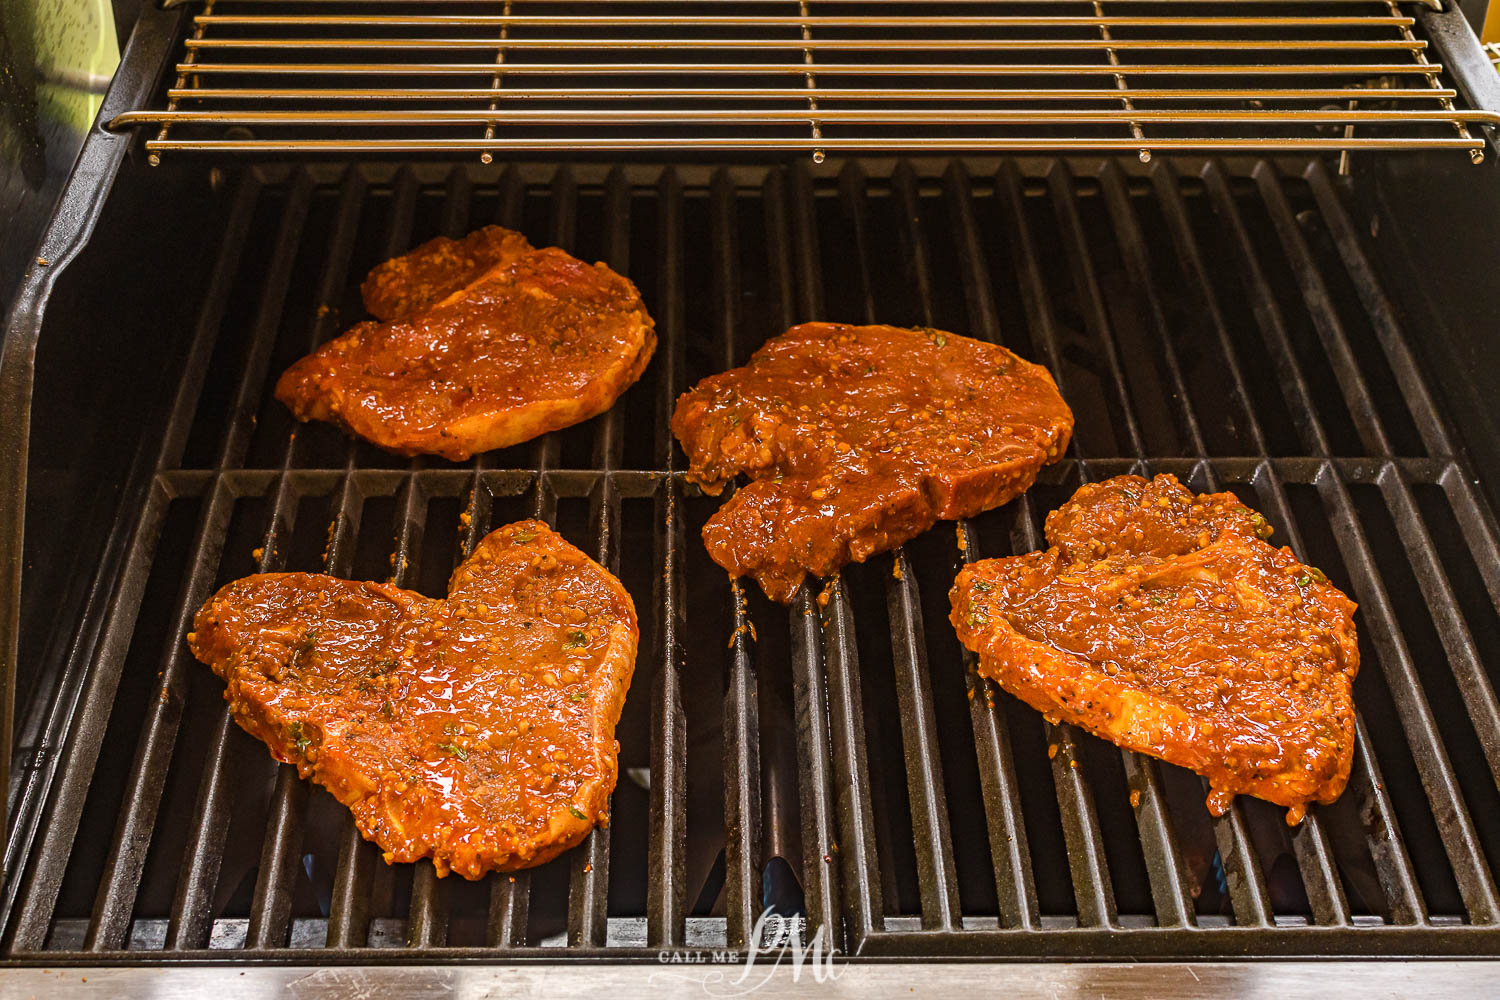 boneless pork chops on the grill.